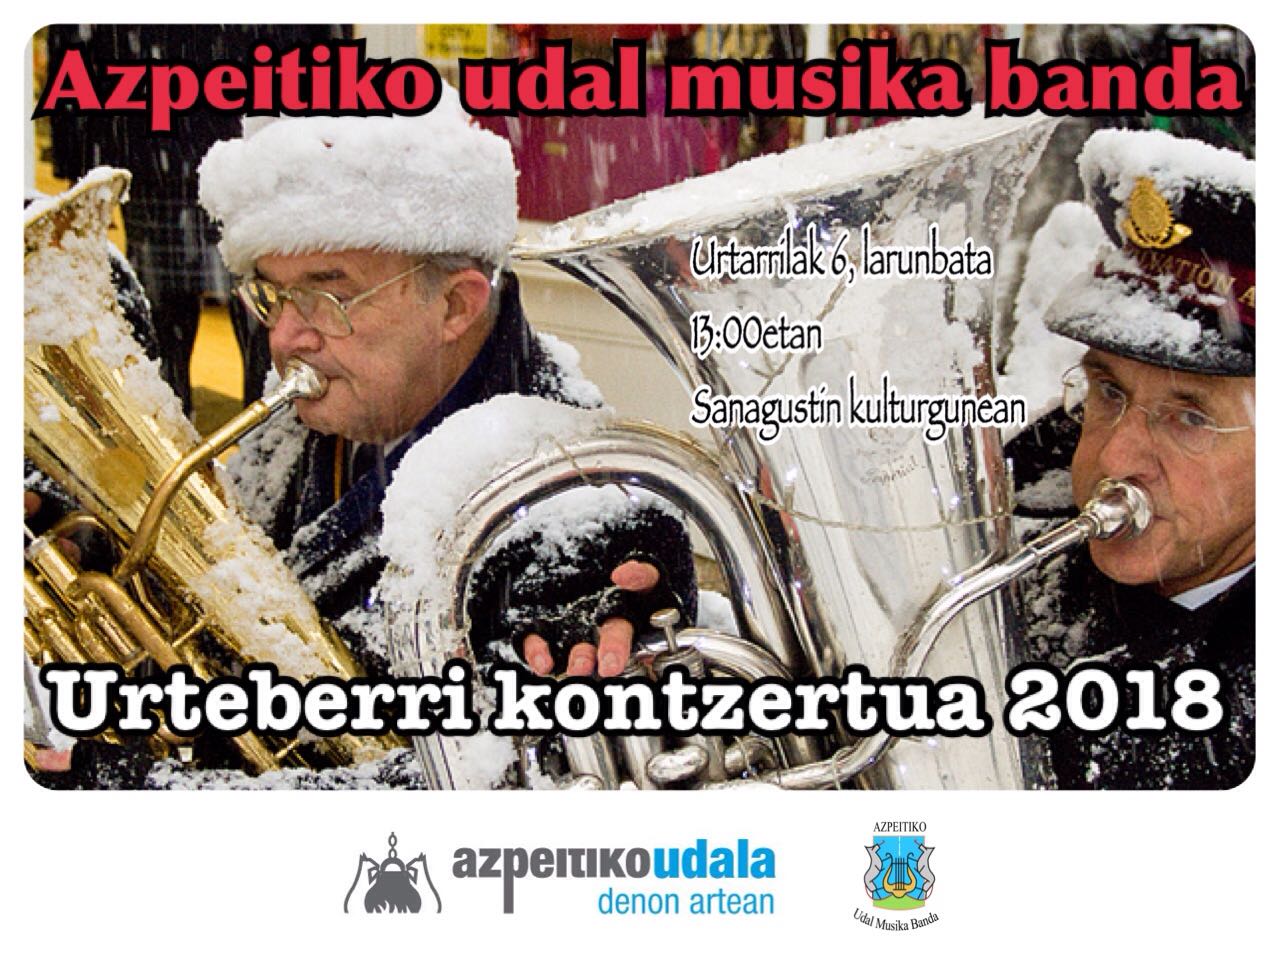 Azpeitiko Musika Banda